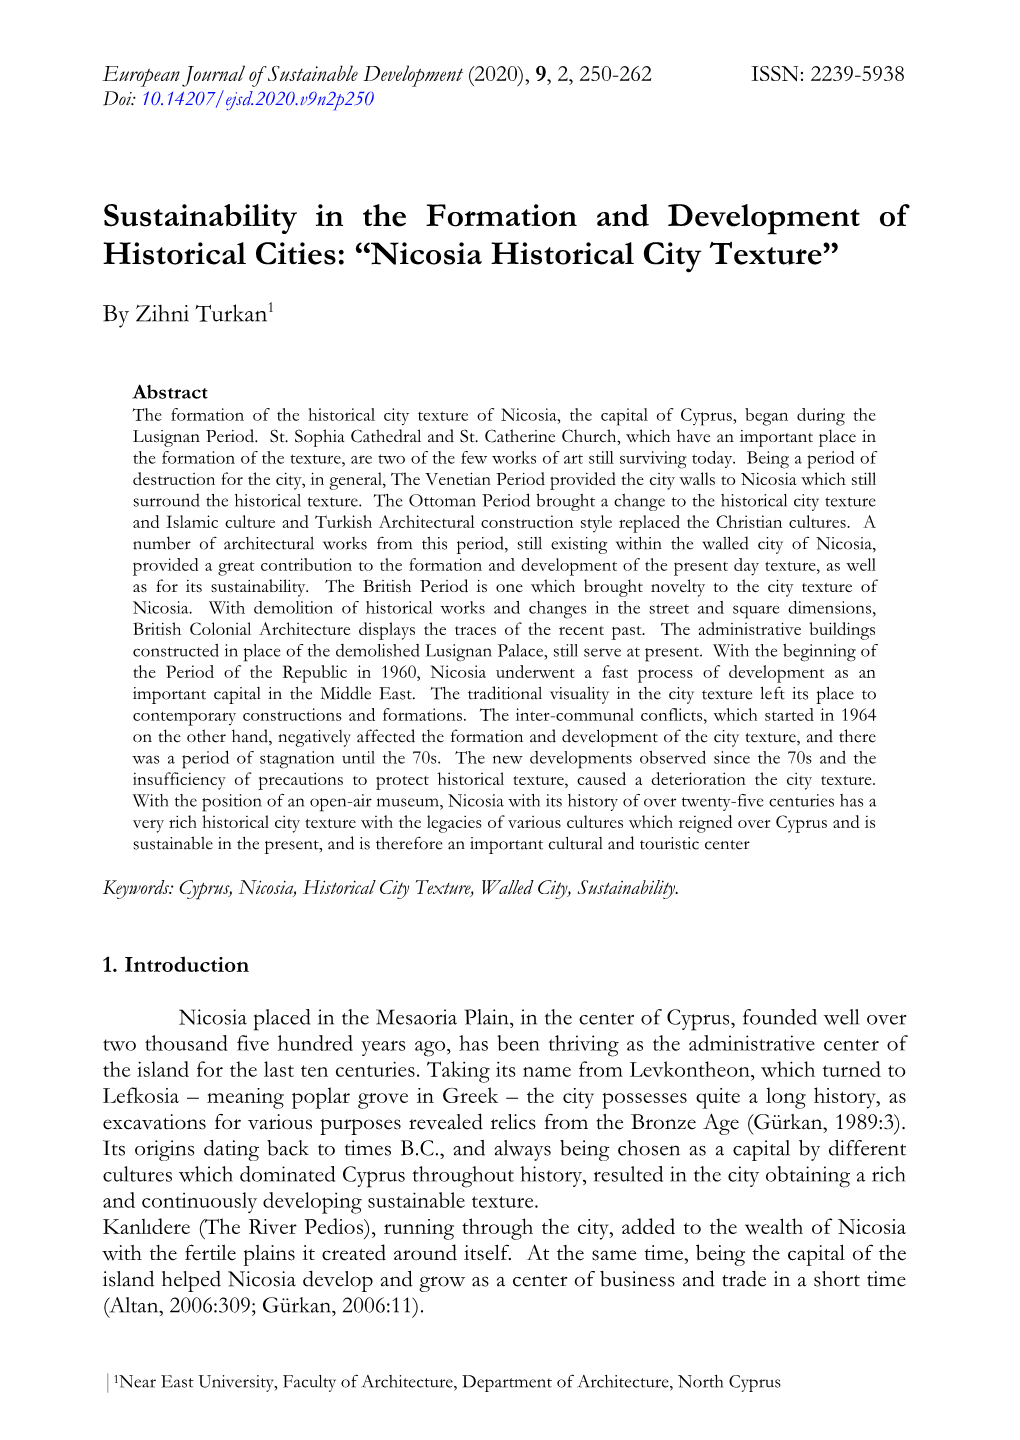 Nicosia Historical City Texture”